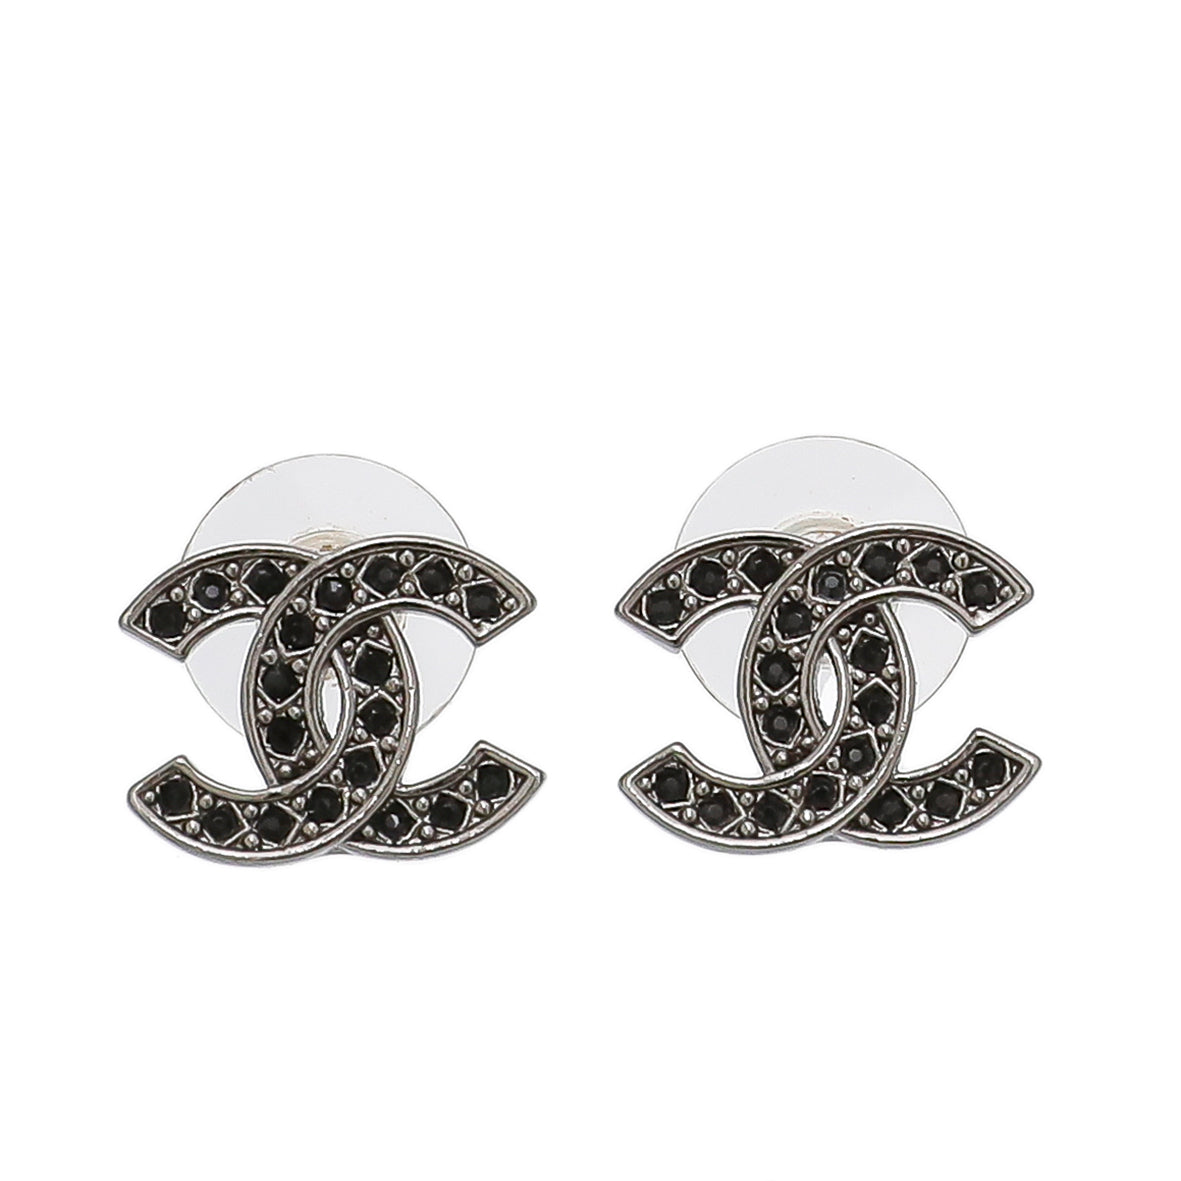 Chanel Black CC Crystal Earrings